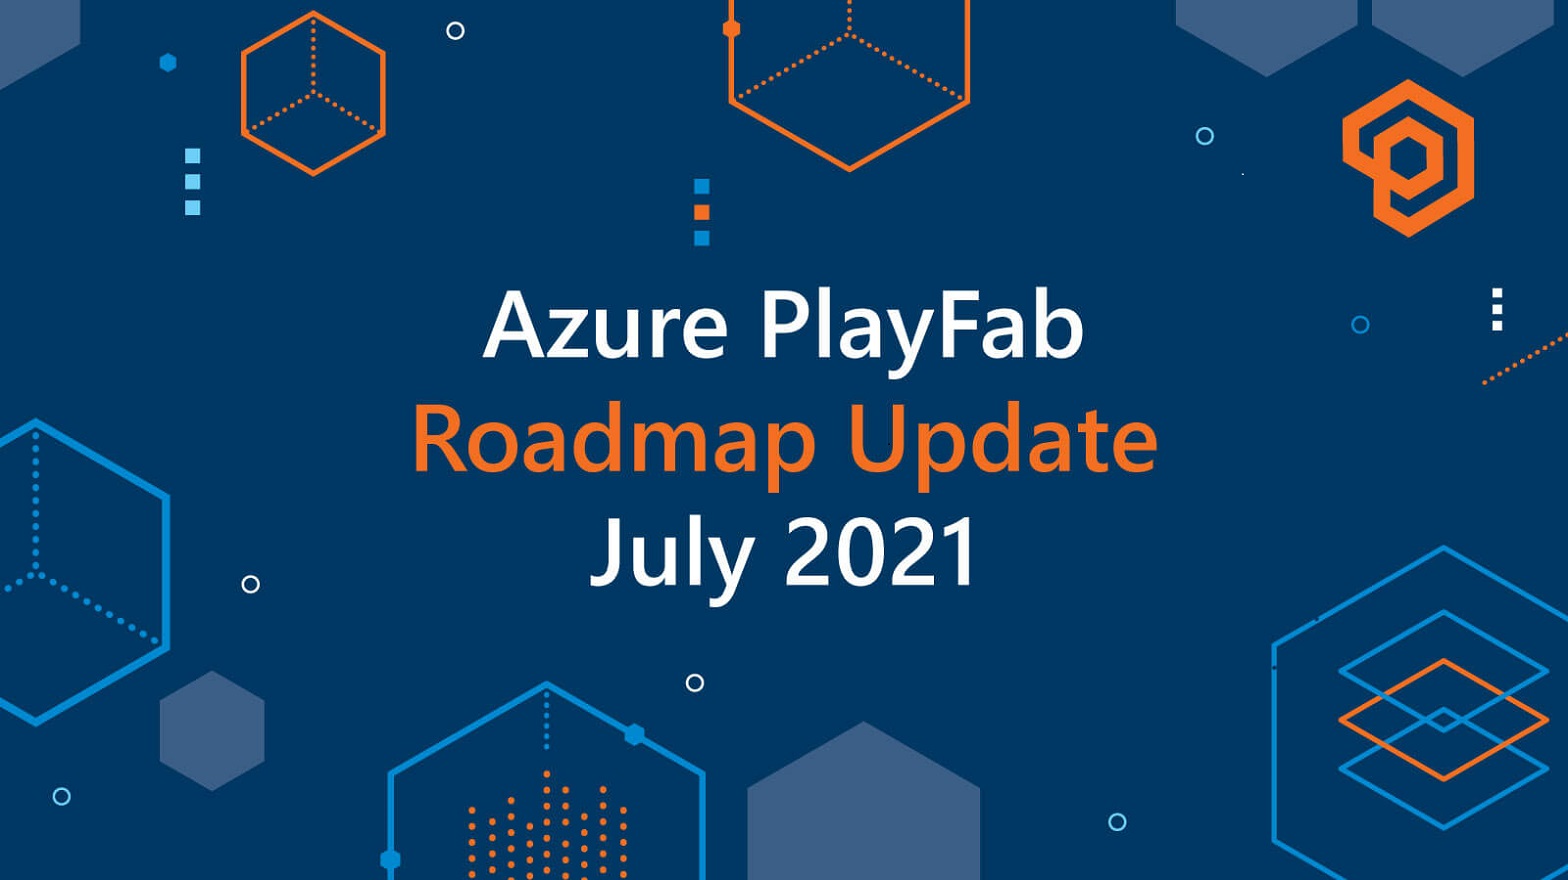 Azure PlayFab Roadmap Update July 2021